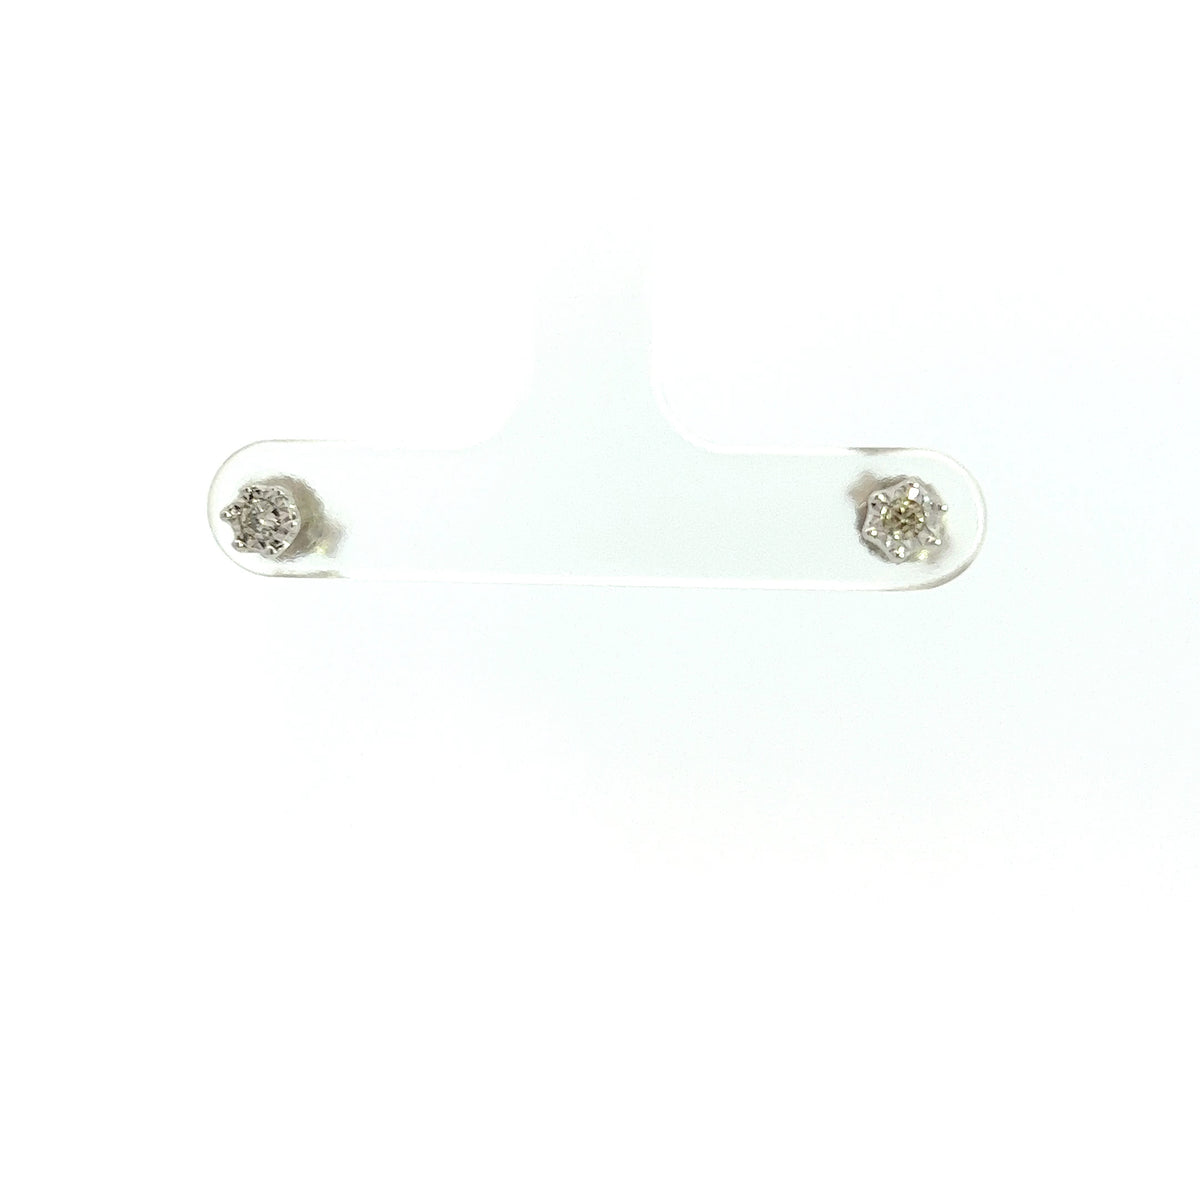 10K White Gold Illusion Set Diamond Solitaire Earrings 0.08cttw